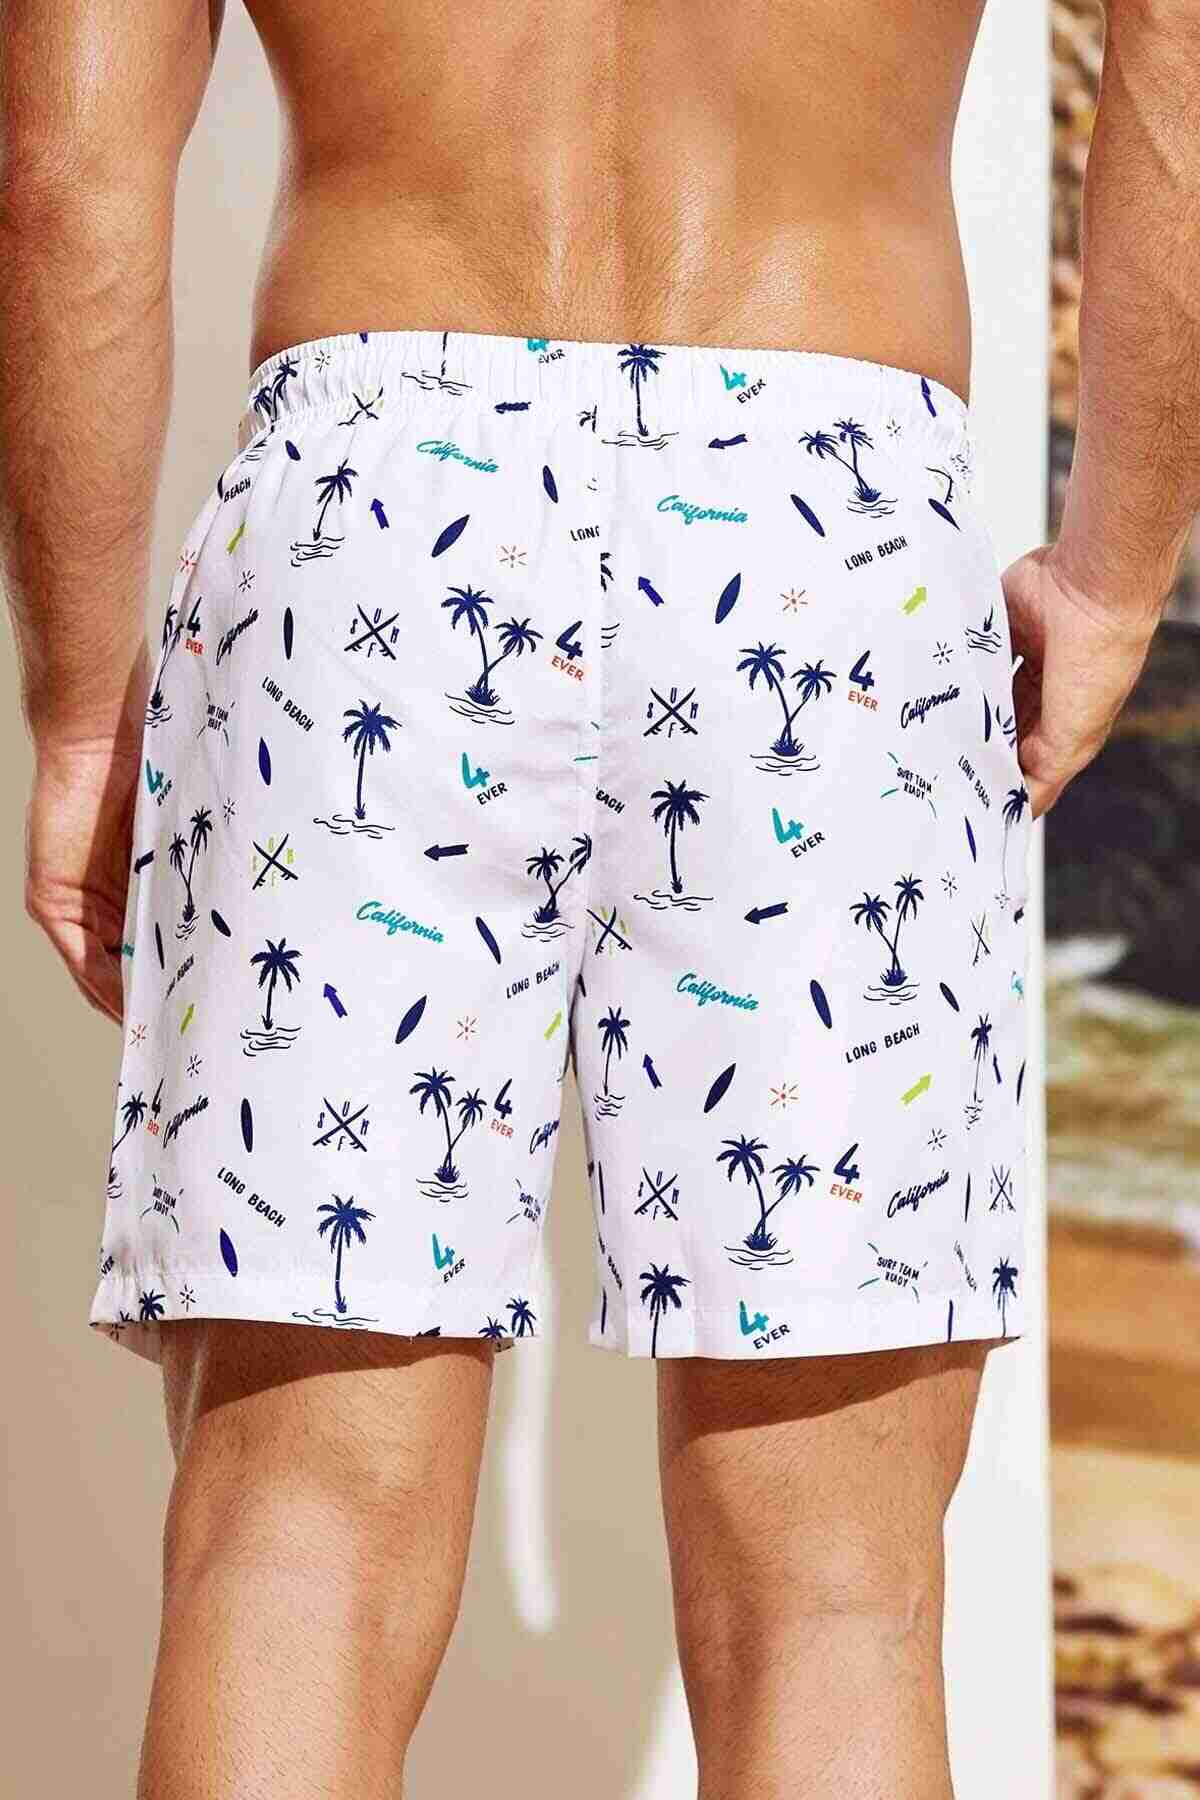 Men's Basic Standard Size Palm Printed Swimsuit Pocket Marine Shorts White Piamoda